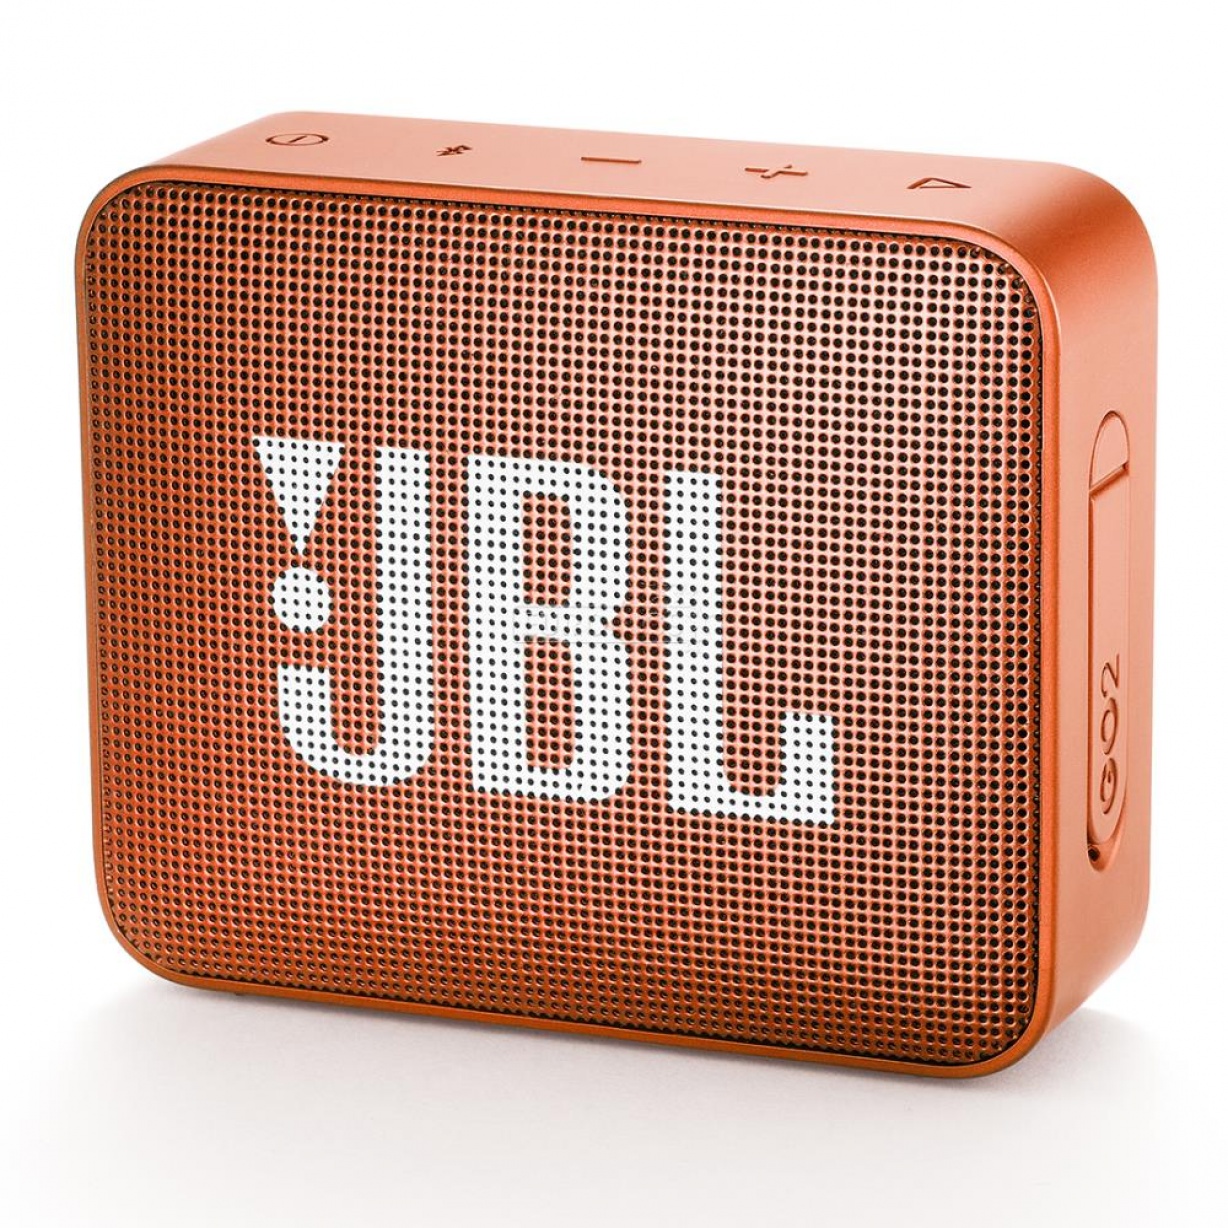 Kolonėlė JBL Go 2 Bluetooth Speaker 1.0 Orange 3.0W